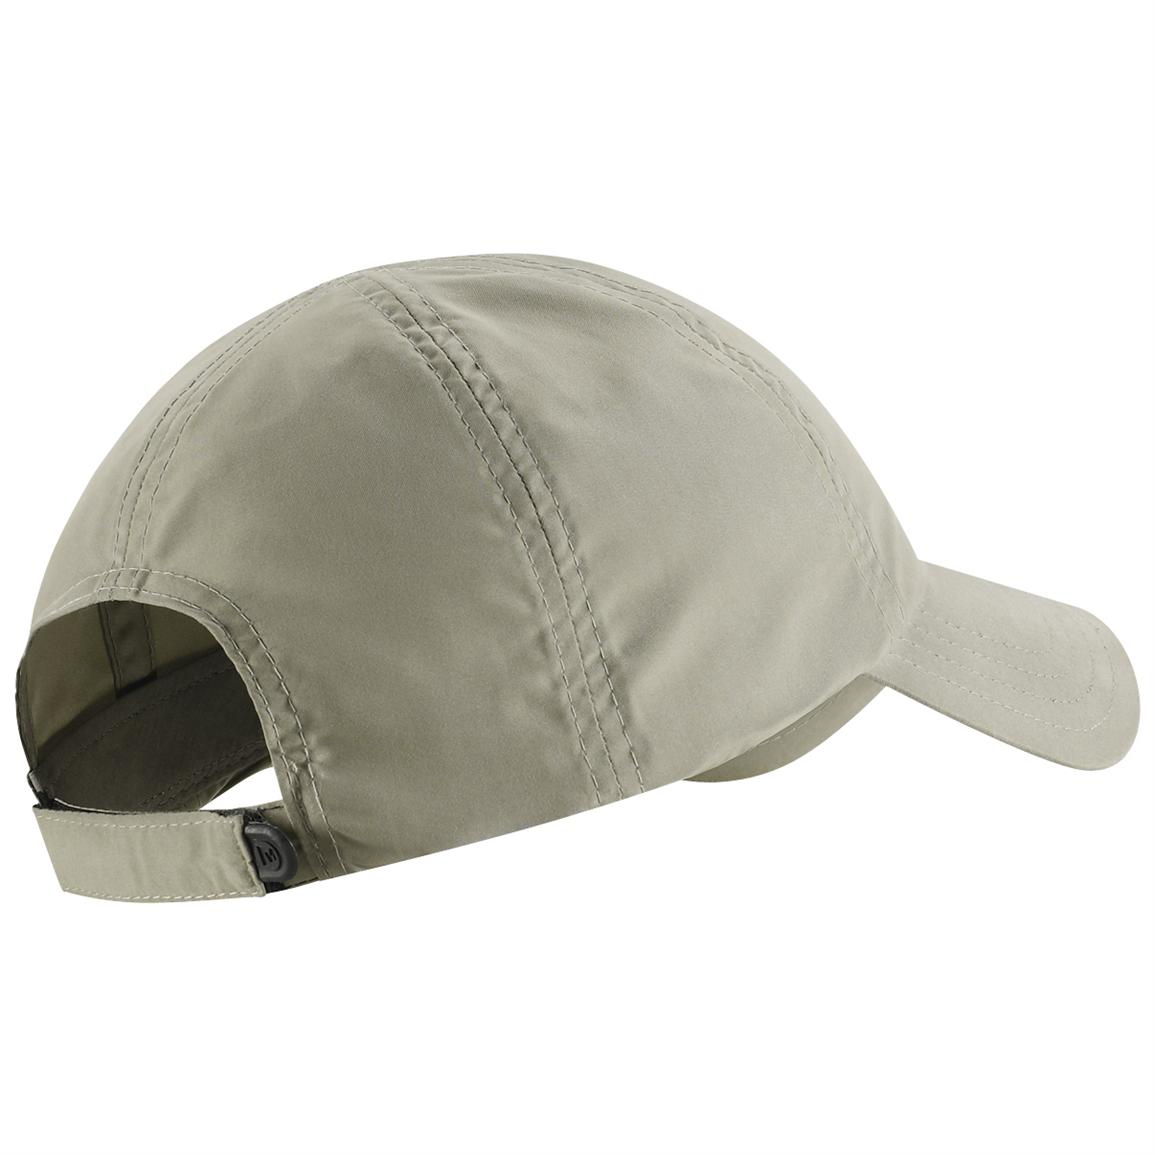 Men's Merrell® Sierra Ball Cap - 164410, Hats & Caps at Sportsman's Guide